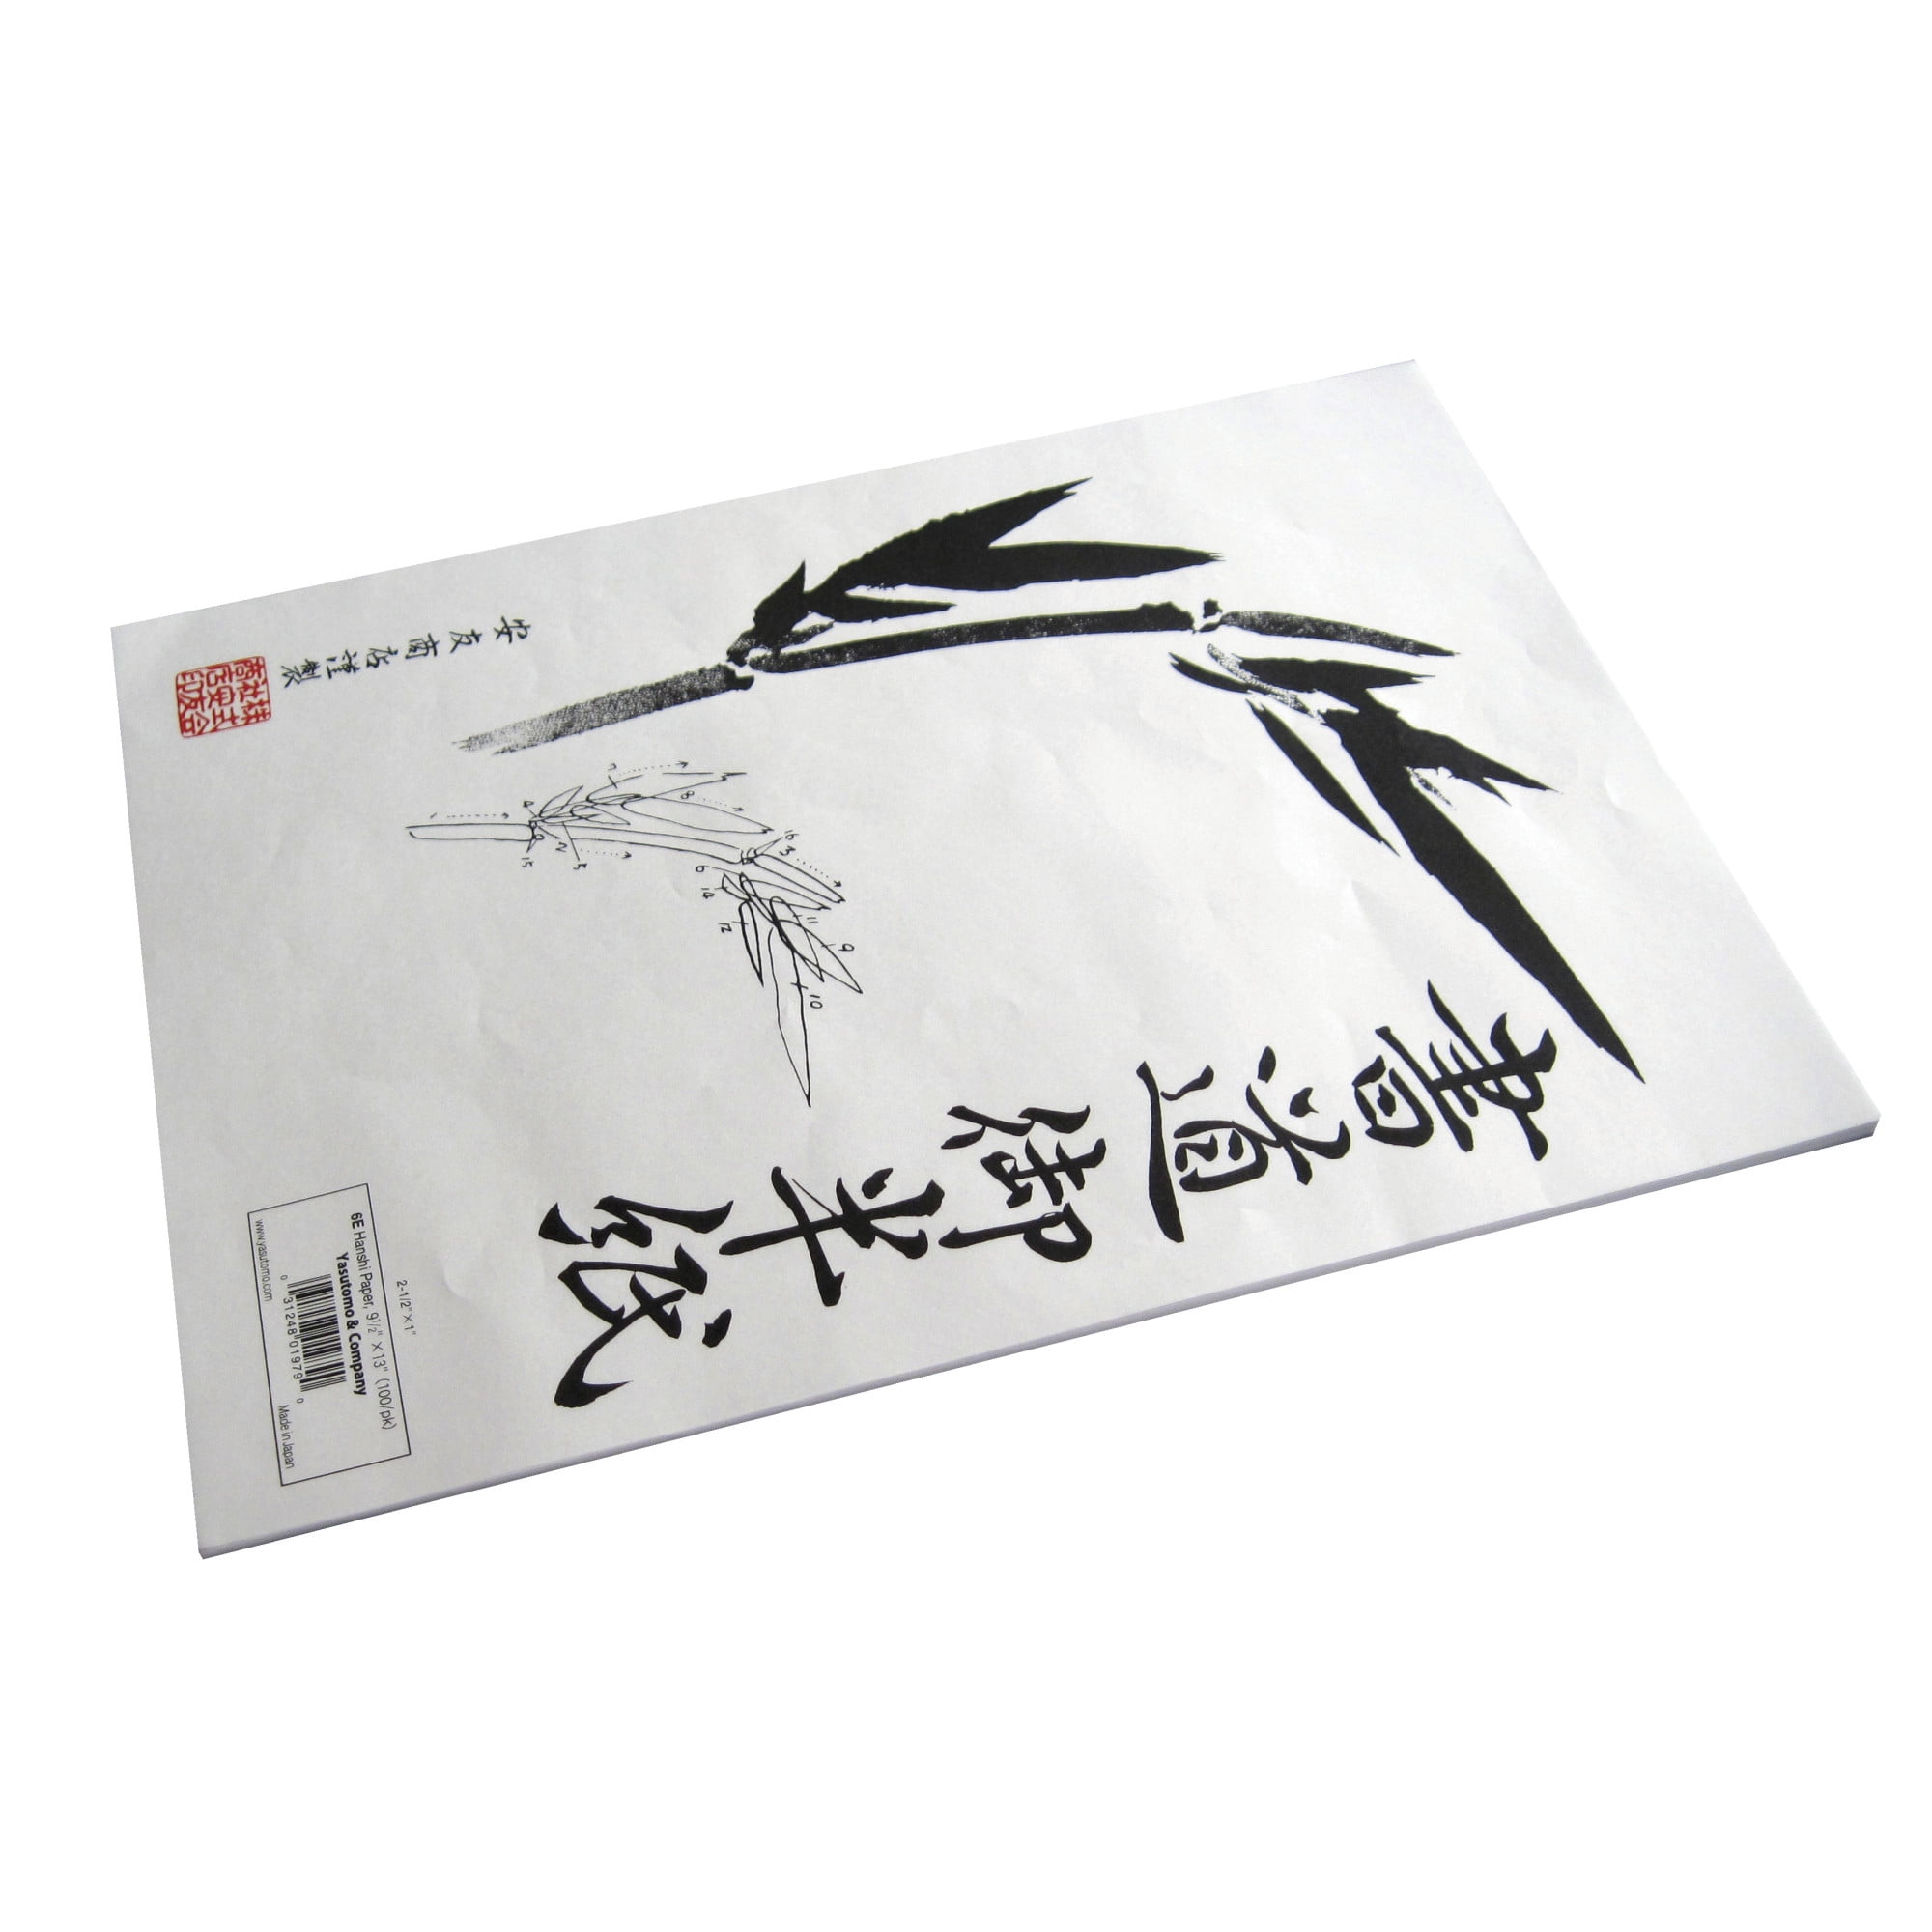  Art Advantage Rice Paper Sumi Brush Gift Set in Wood Box,  9-inch x 12-inch, 100 Sheet Pack, White